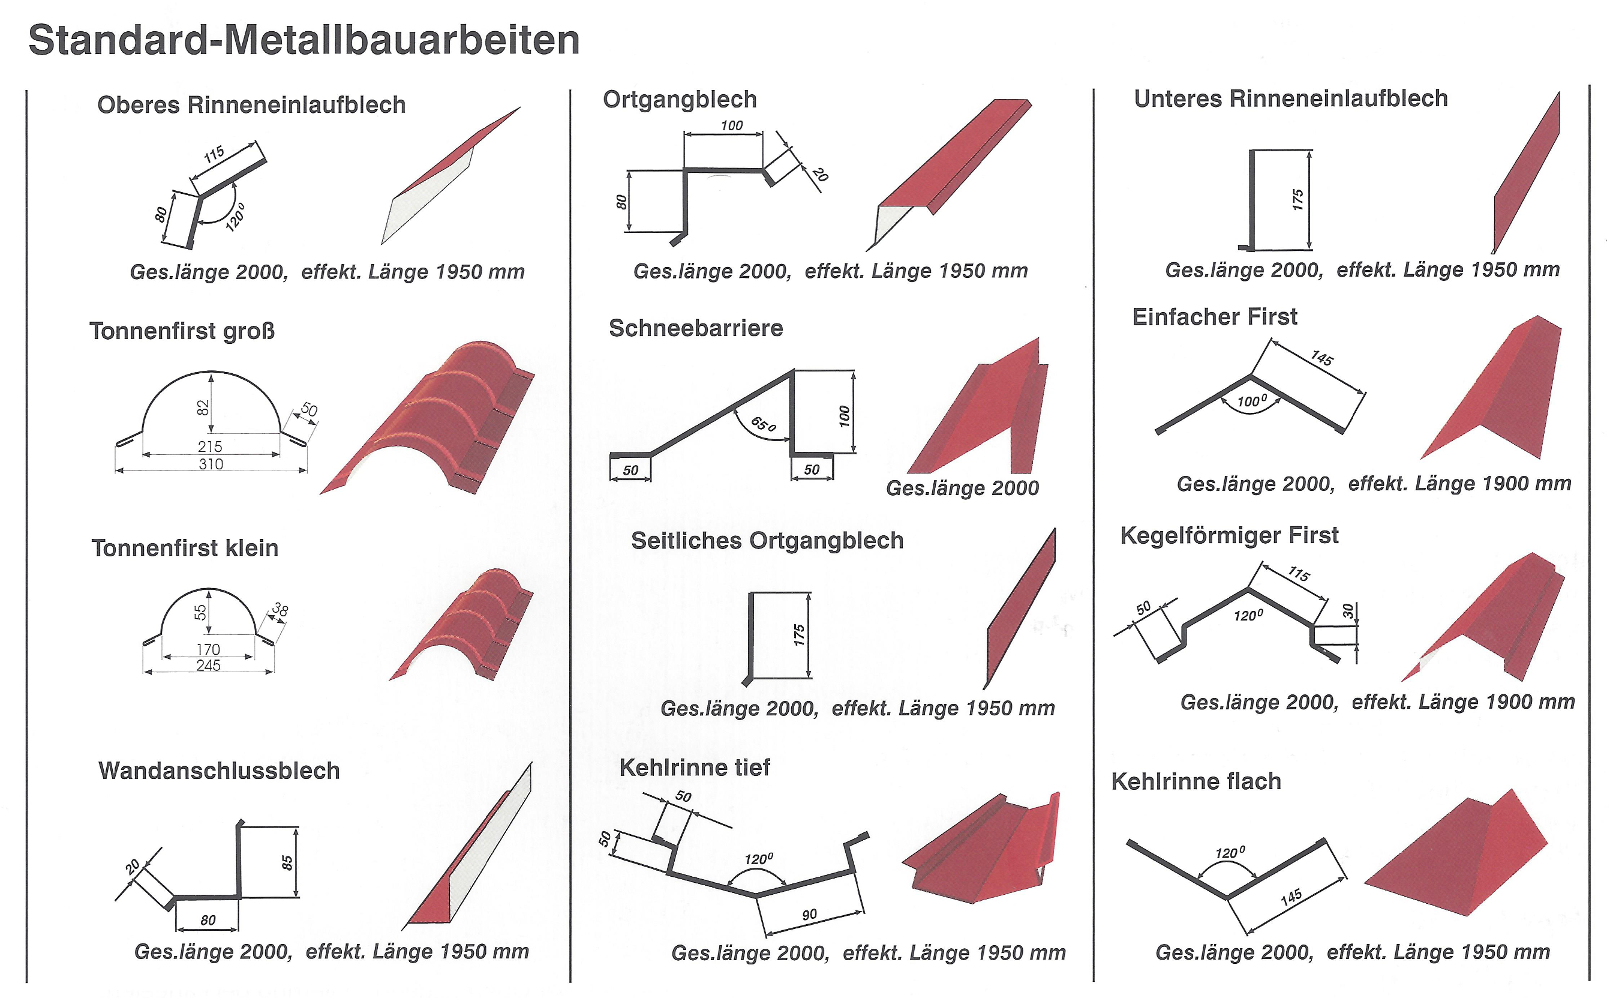 Uebersicht Standard - Kantteile Spenglerarbeiten für Stahlblechplatten - Bedachung